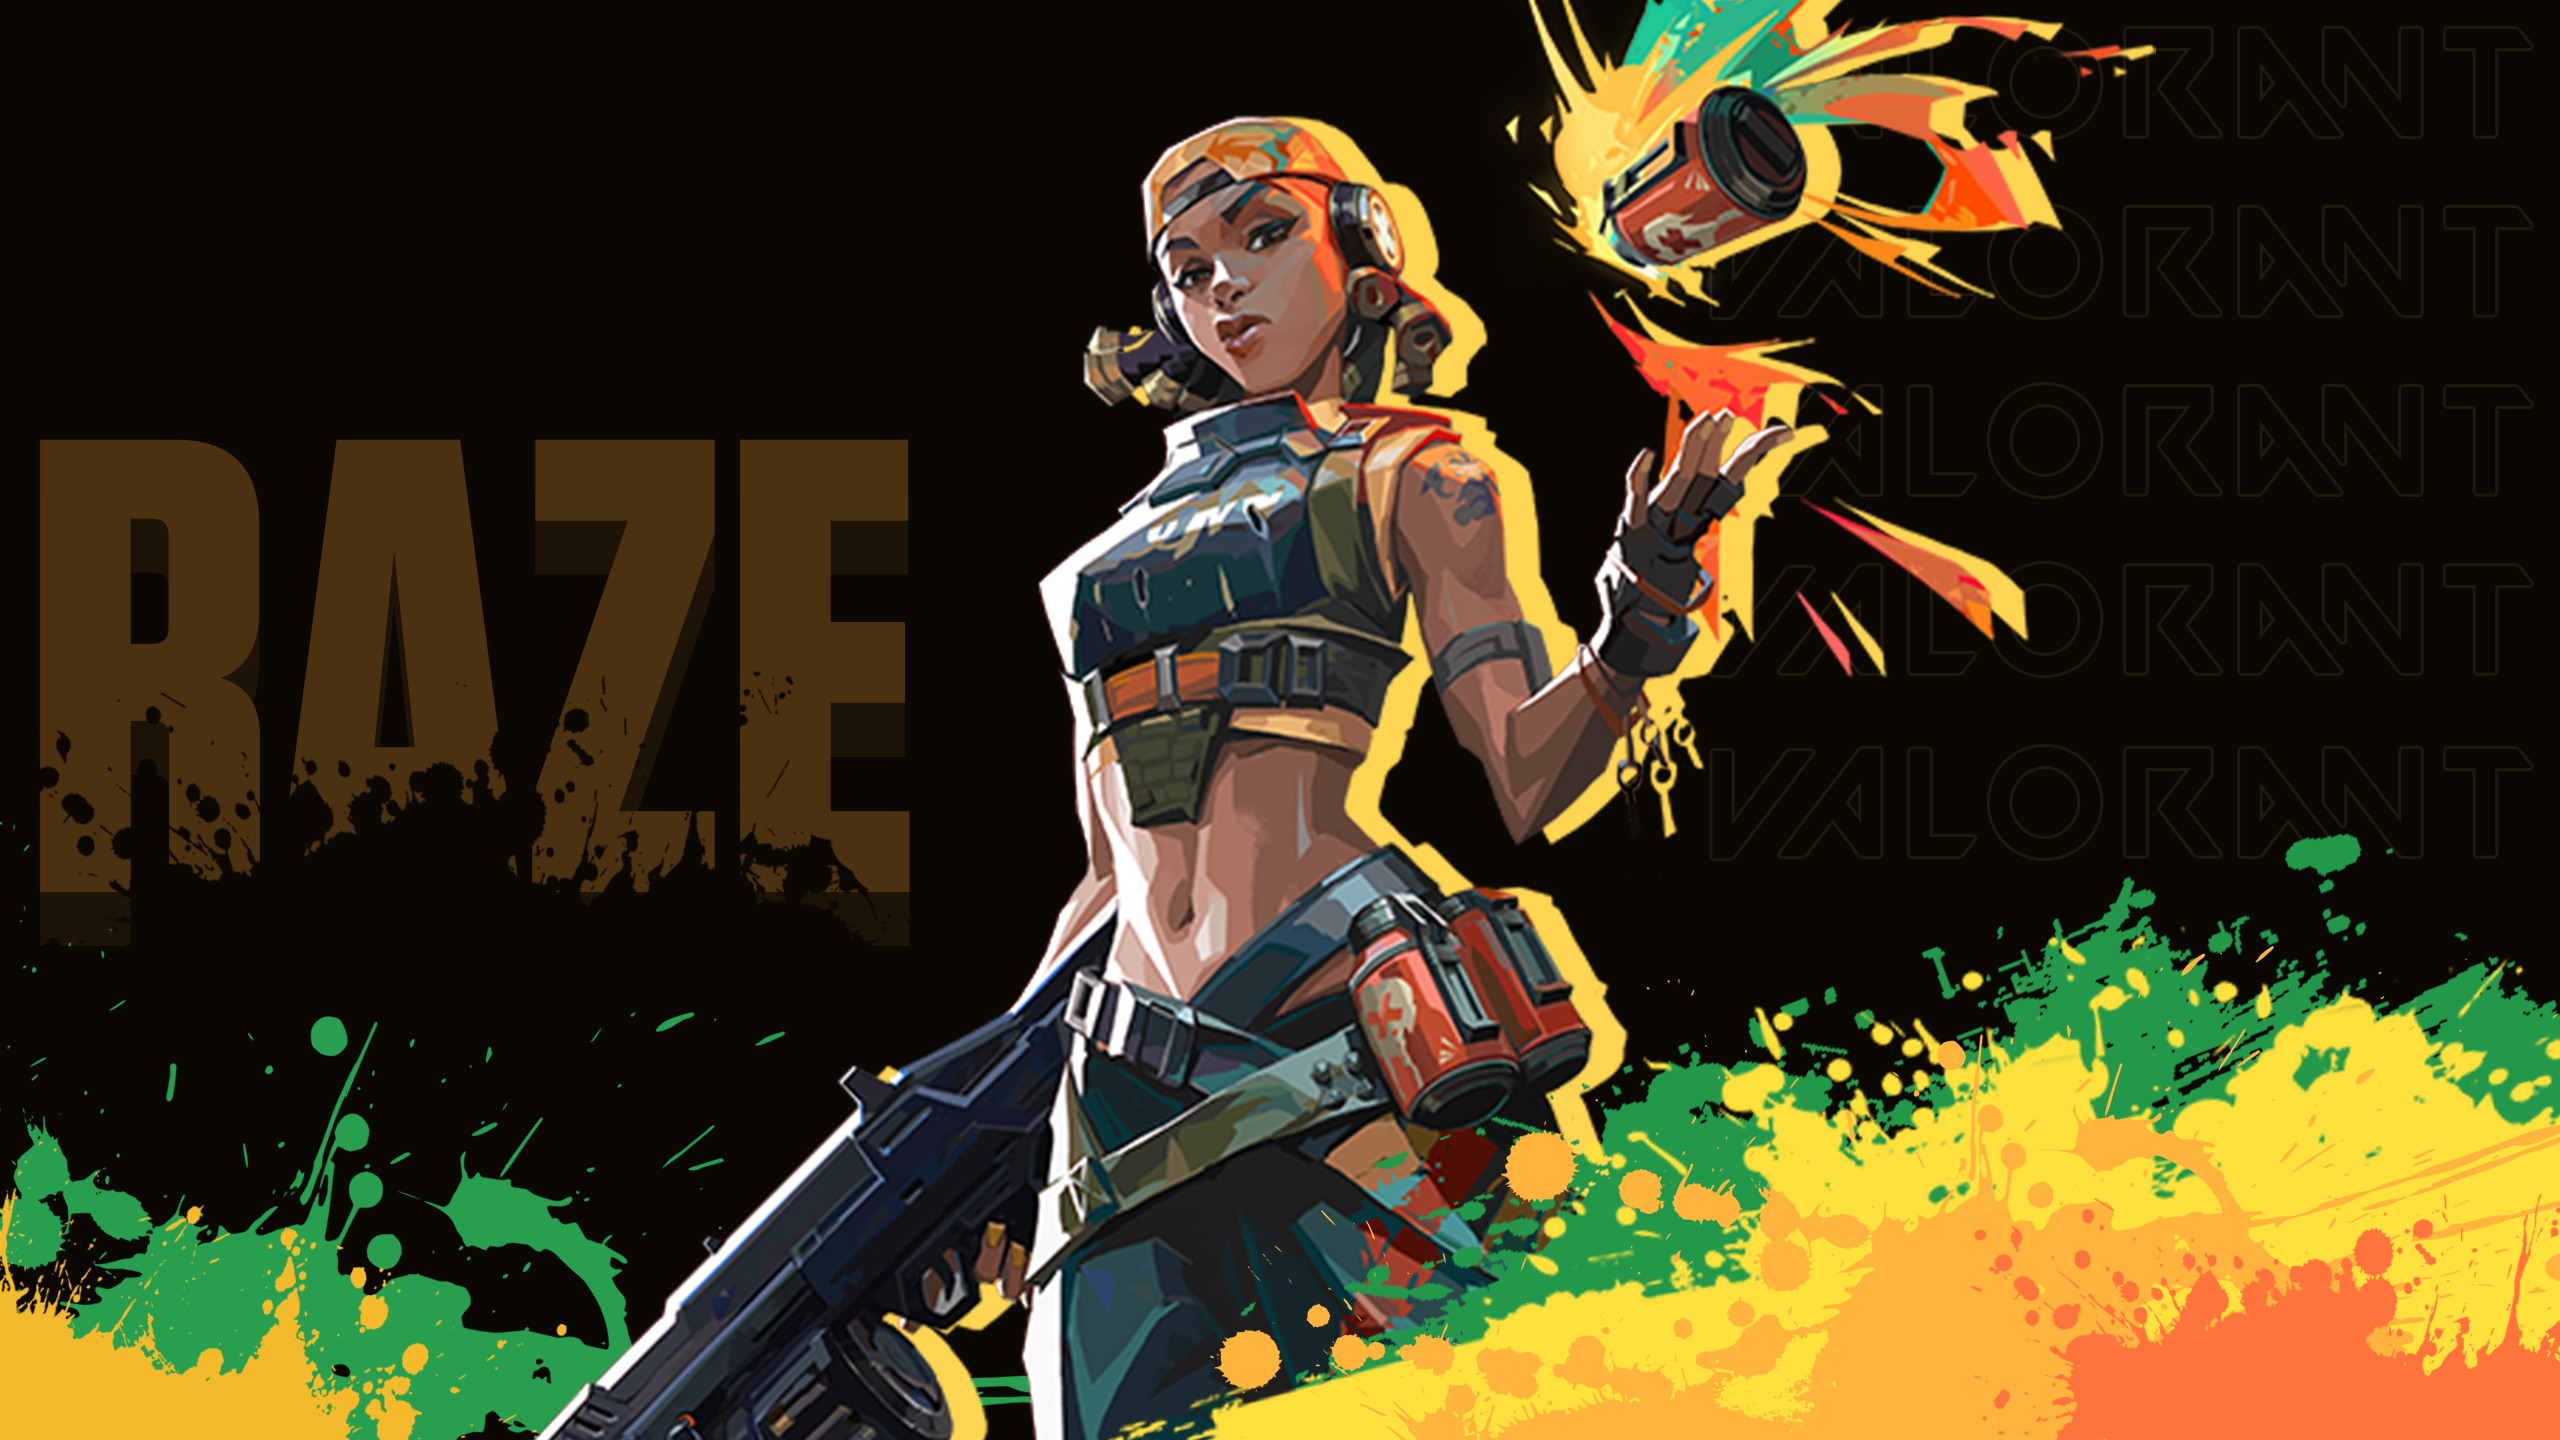 Raze wallpaper by muradyths - Download on ZEDGE™